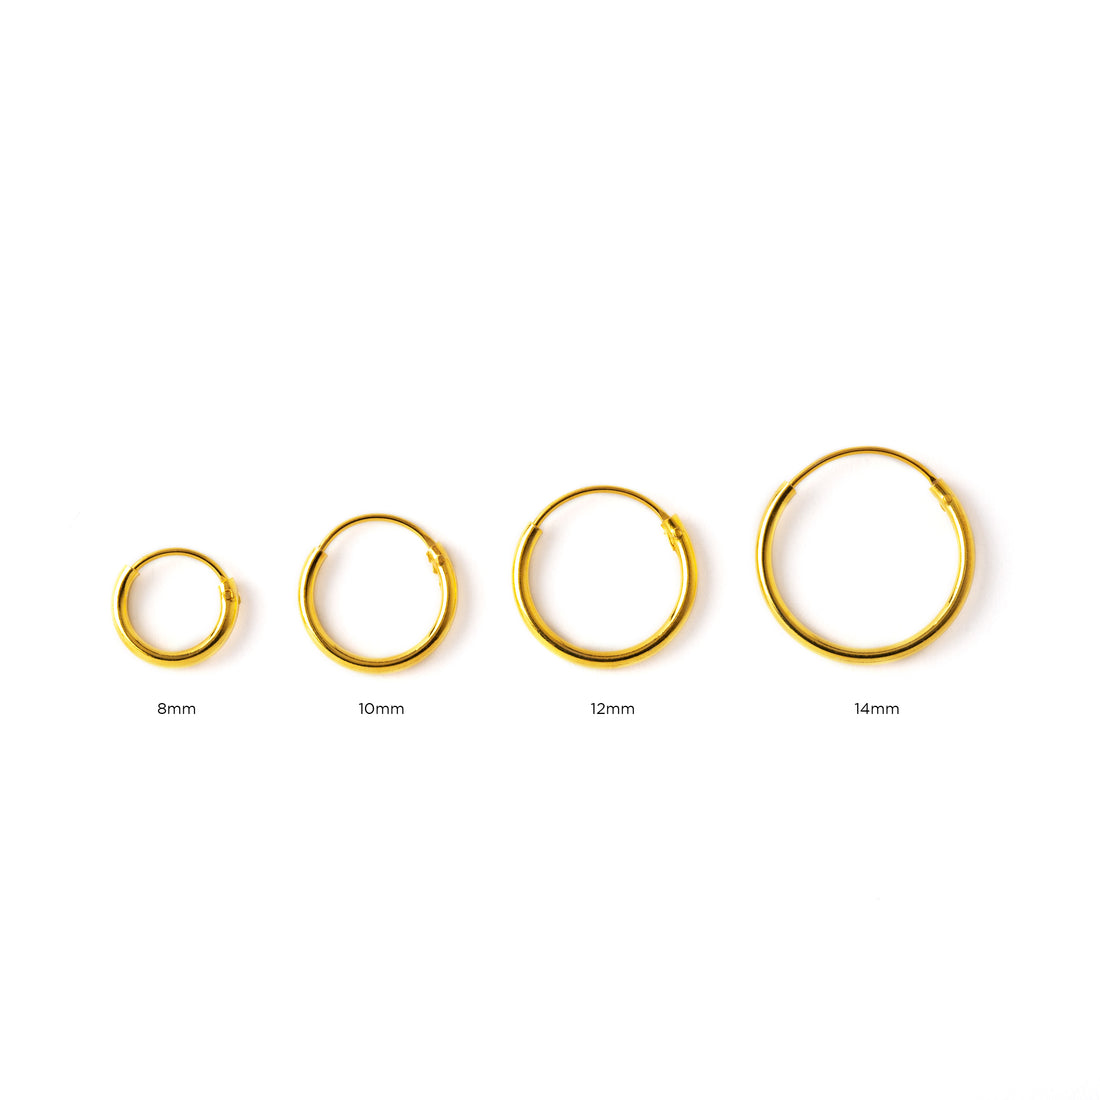 8mm, 10mm, 12mm, 14mm Gold thin hoop earrings